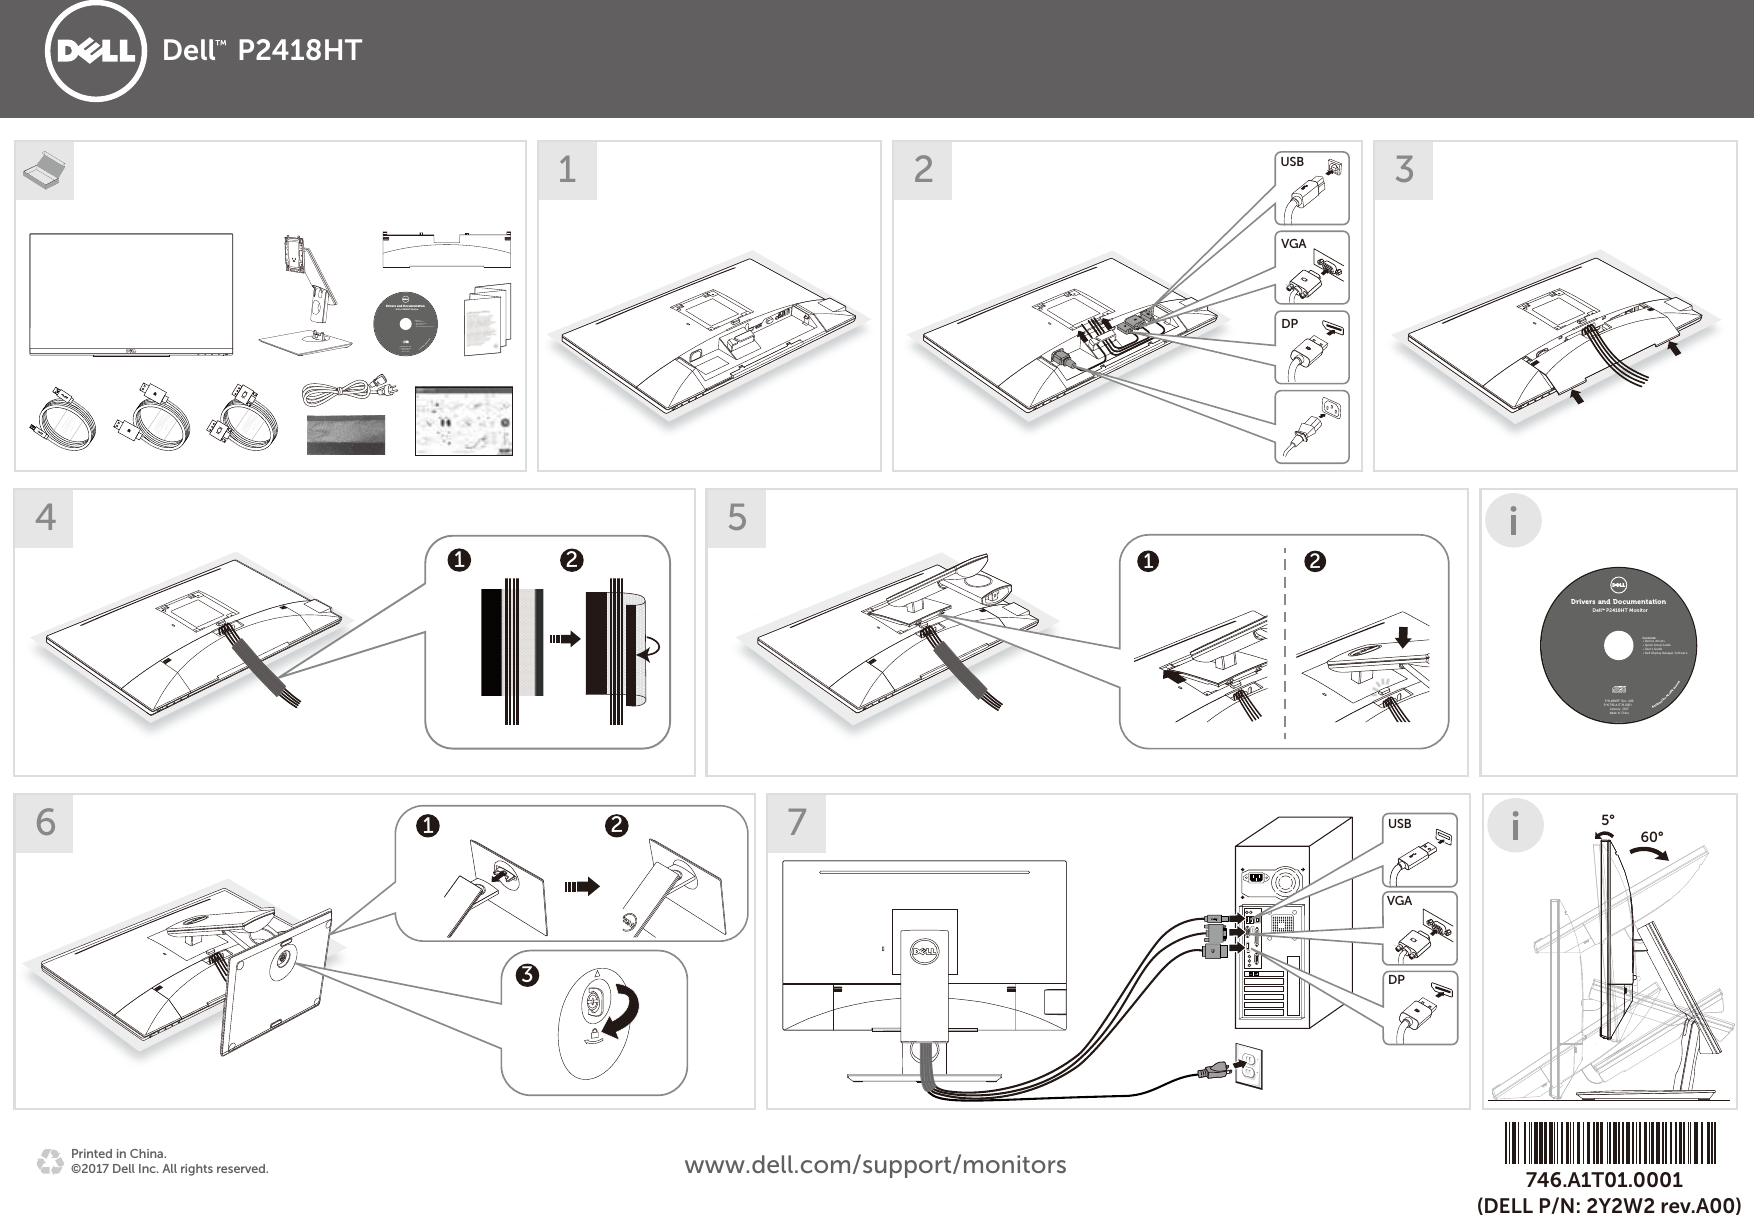 Dell p2418ht monitor Quick Setup Guide User Manual En us